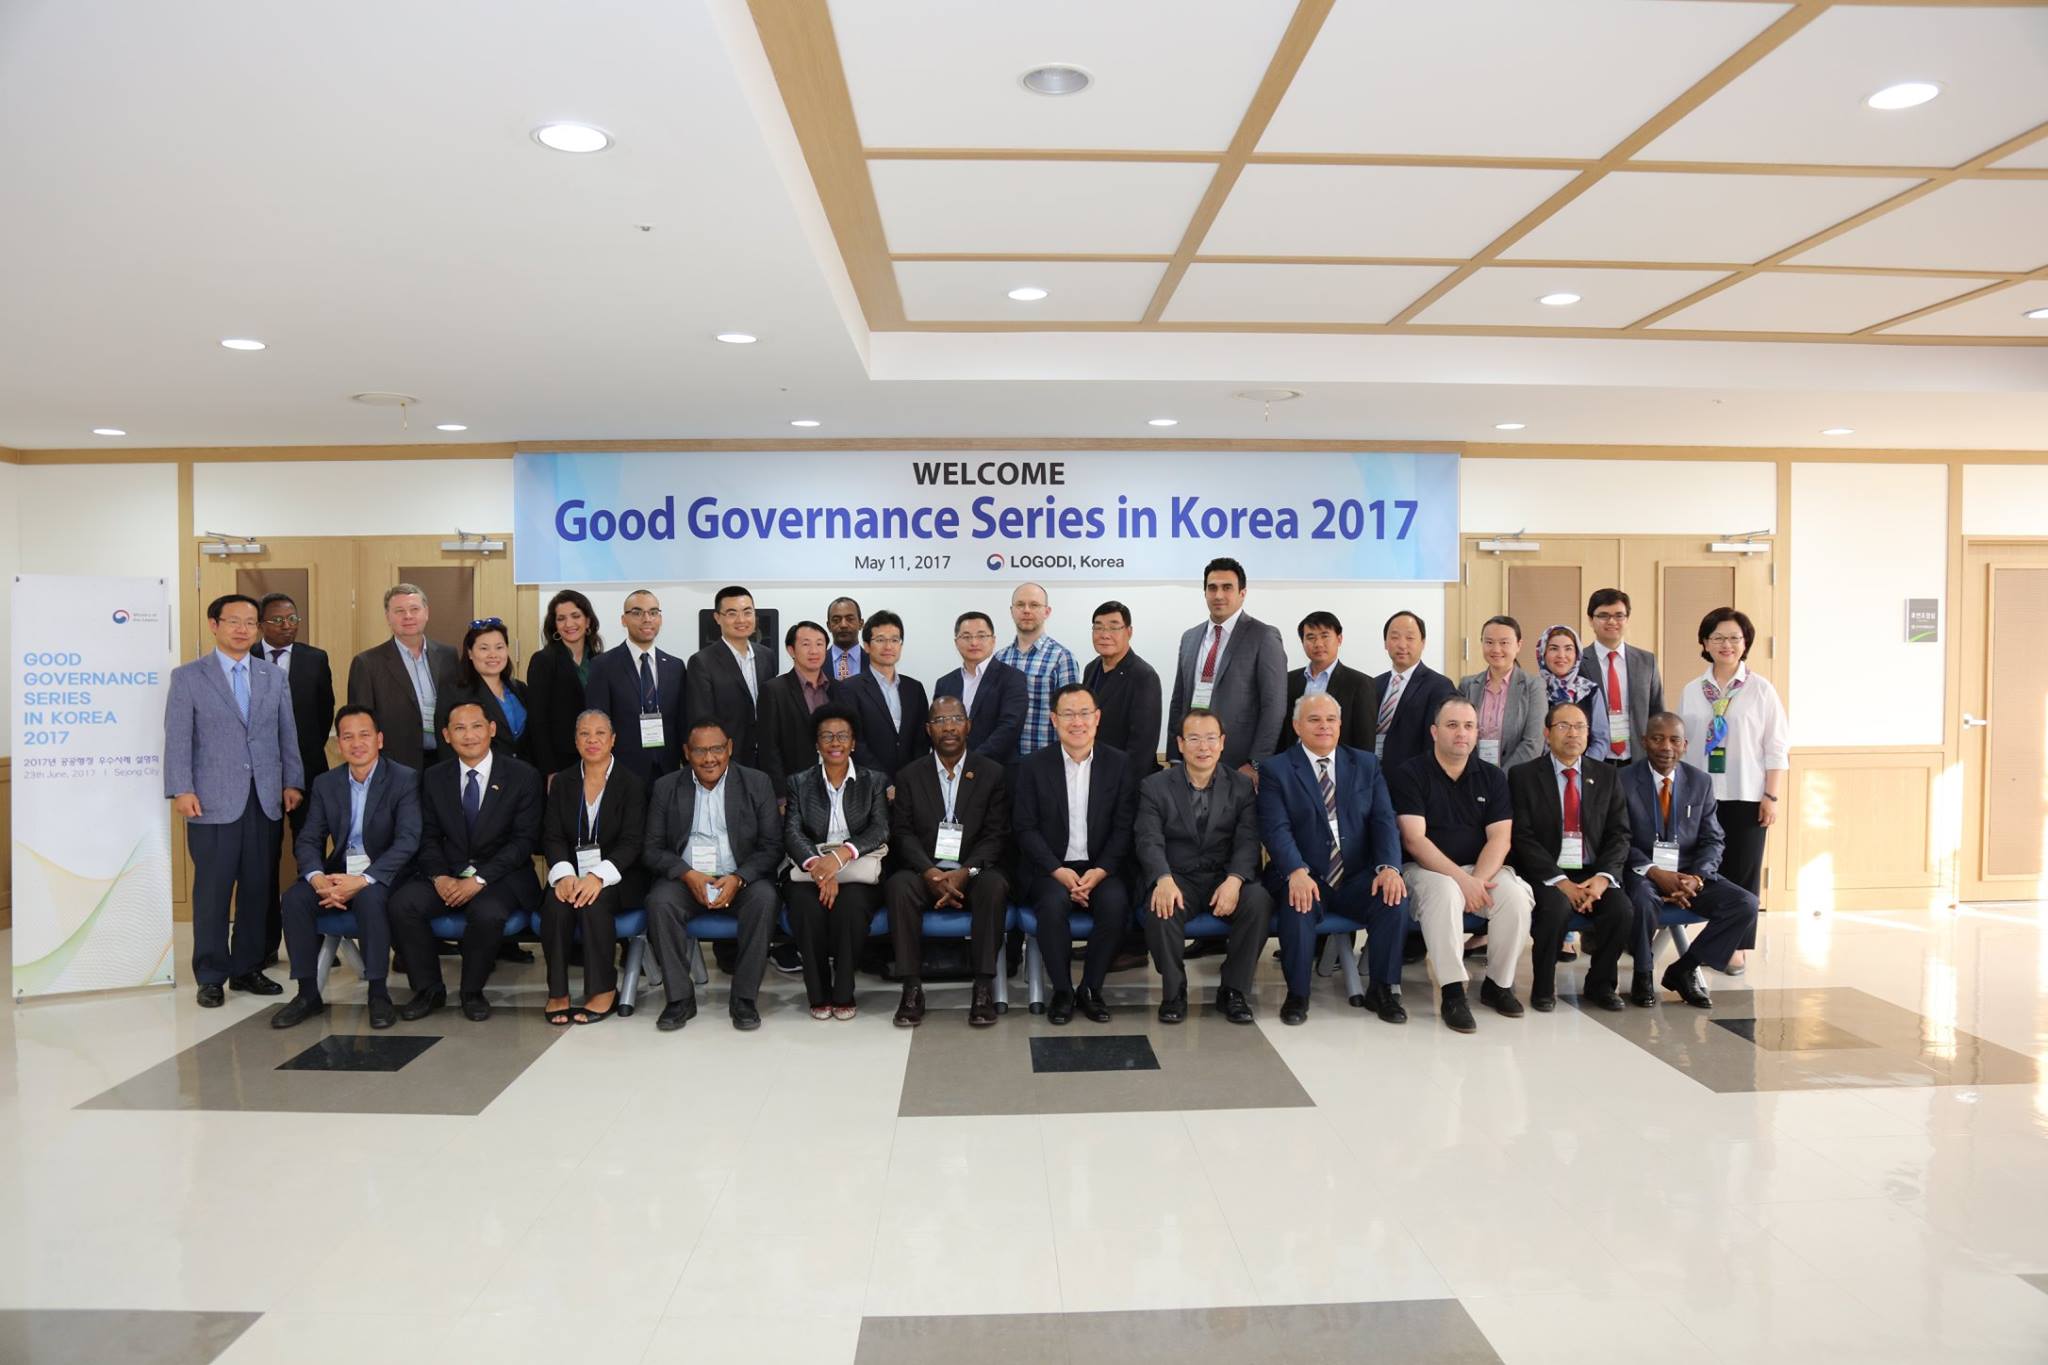 Korean good governance showcased to international community 큰 이미지[마우스 클릭 시 창닫기]